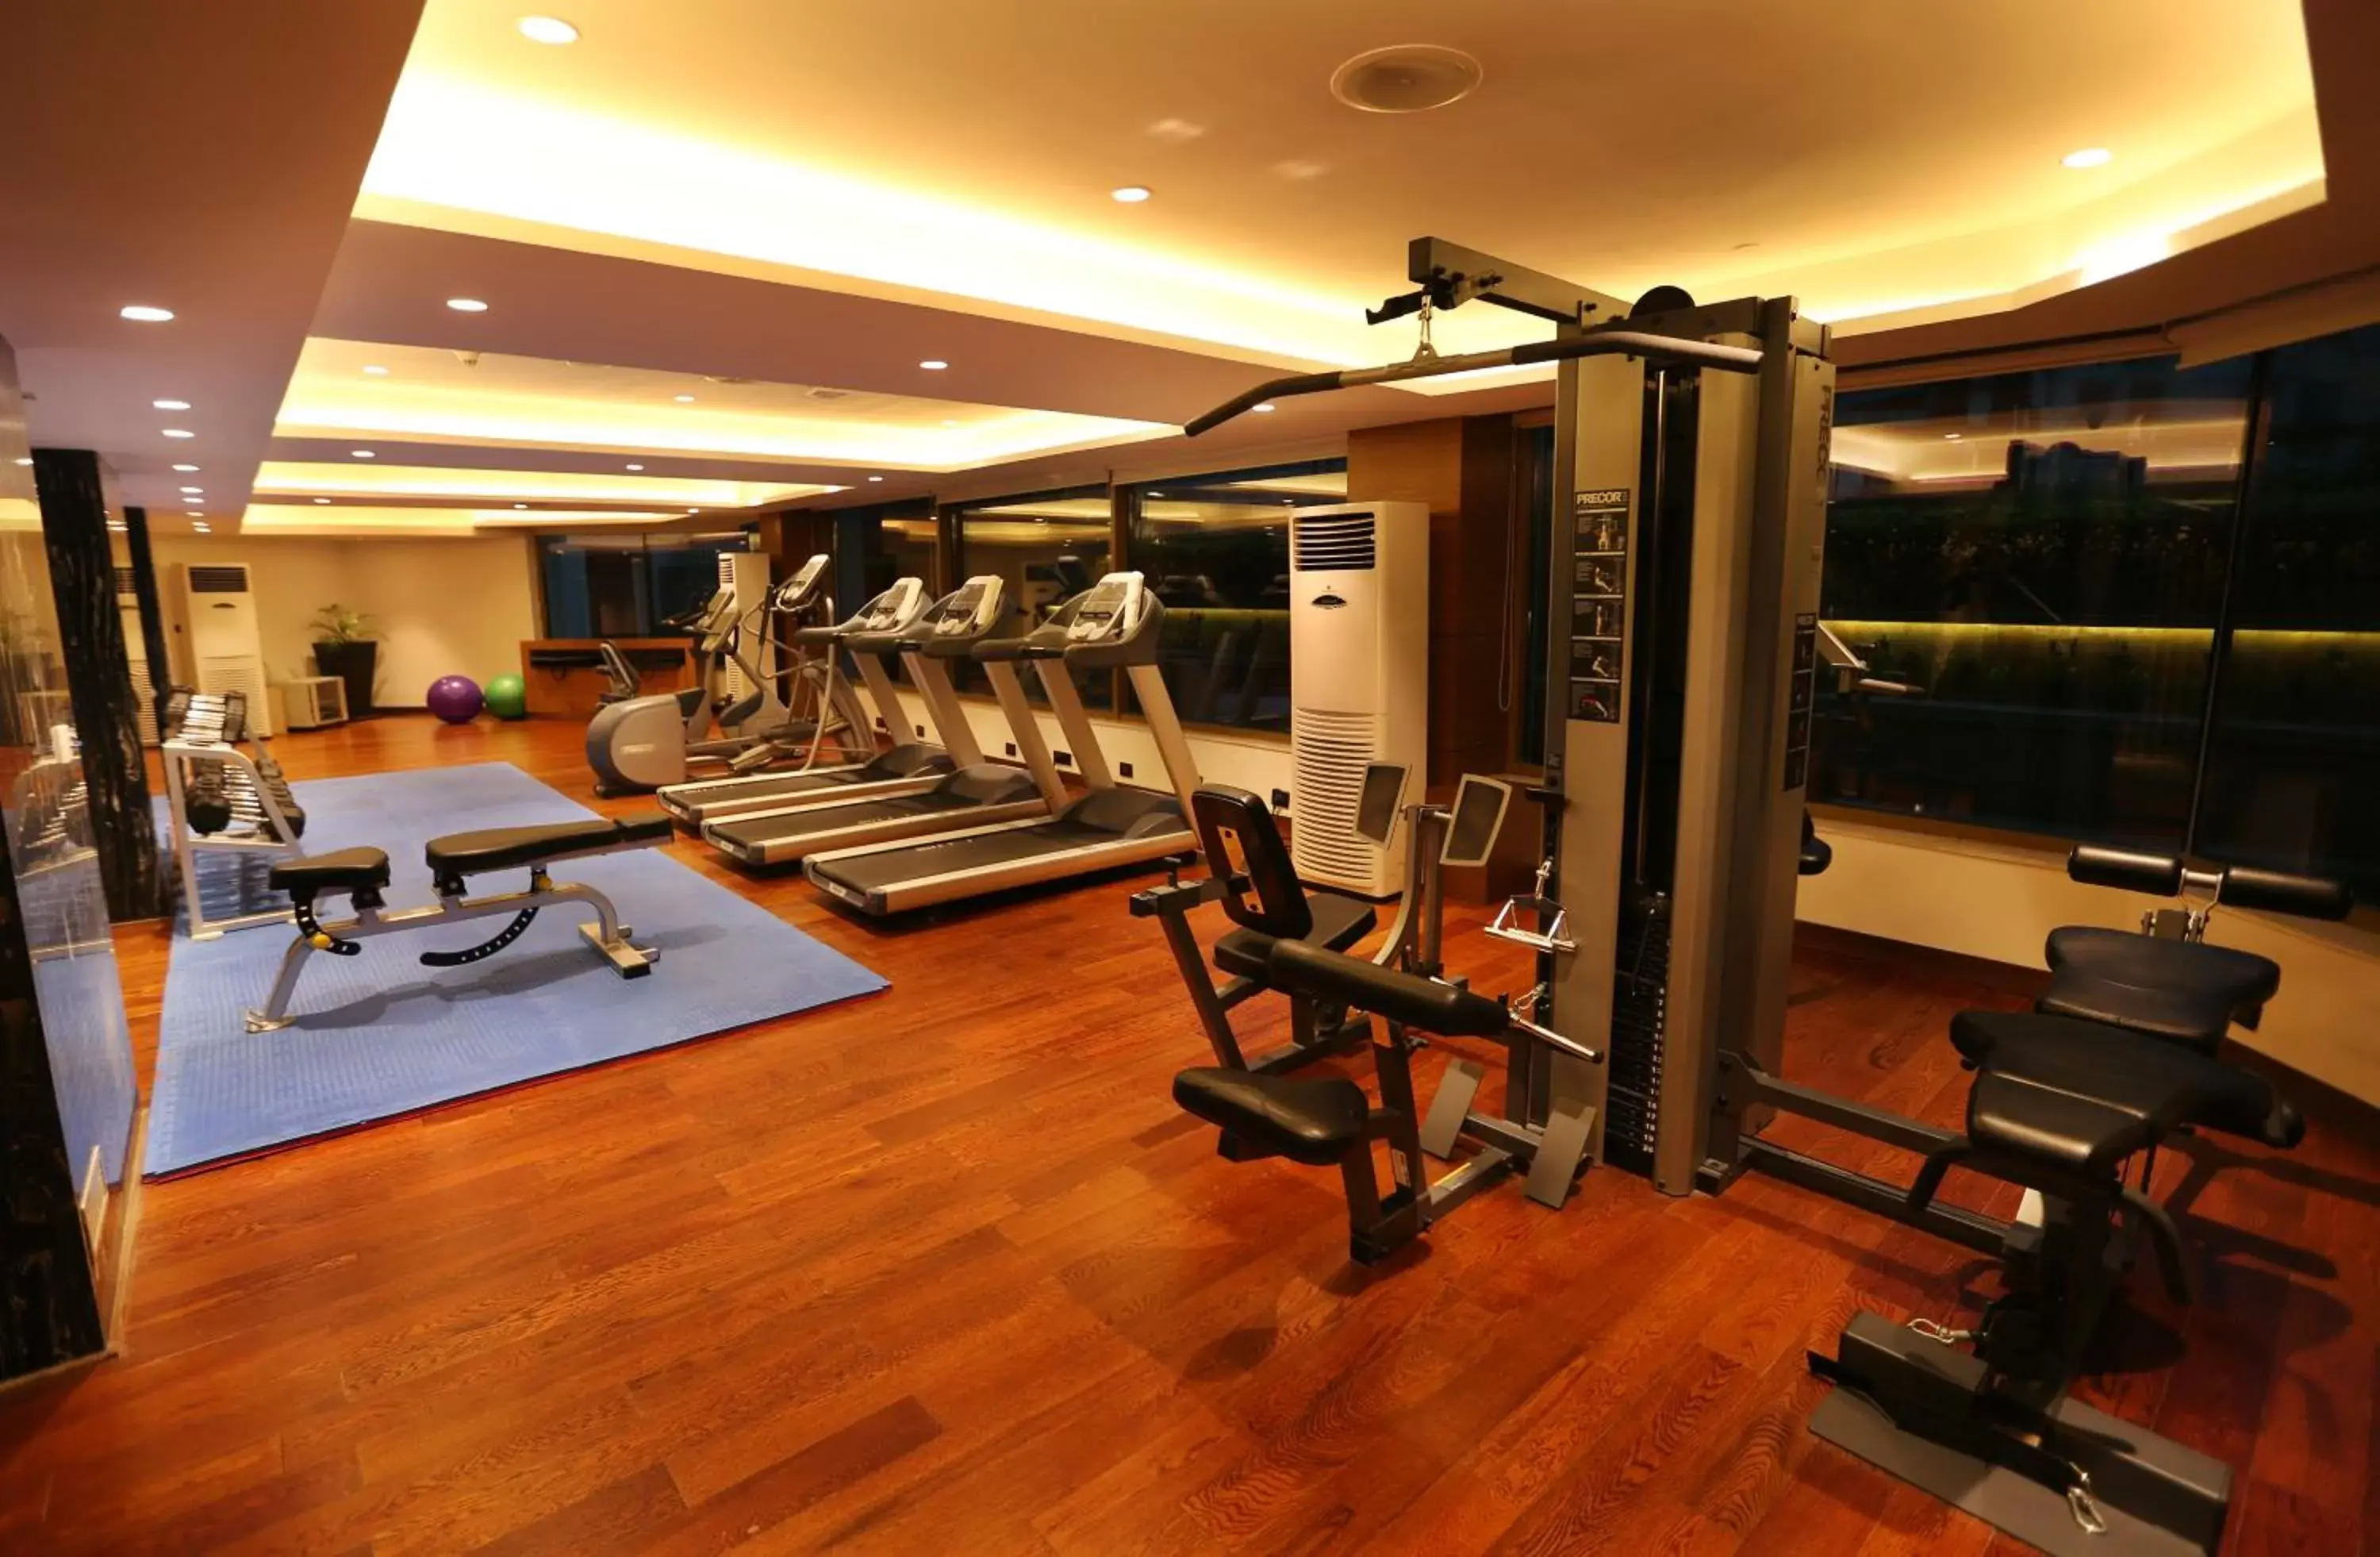 Fitness centre/facilities, Fitness Center/Facilities in Pride Plaza Hotel, Aerocity New Delhi